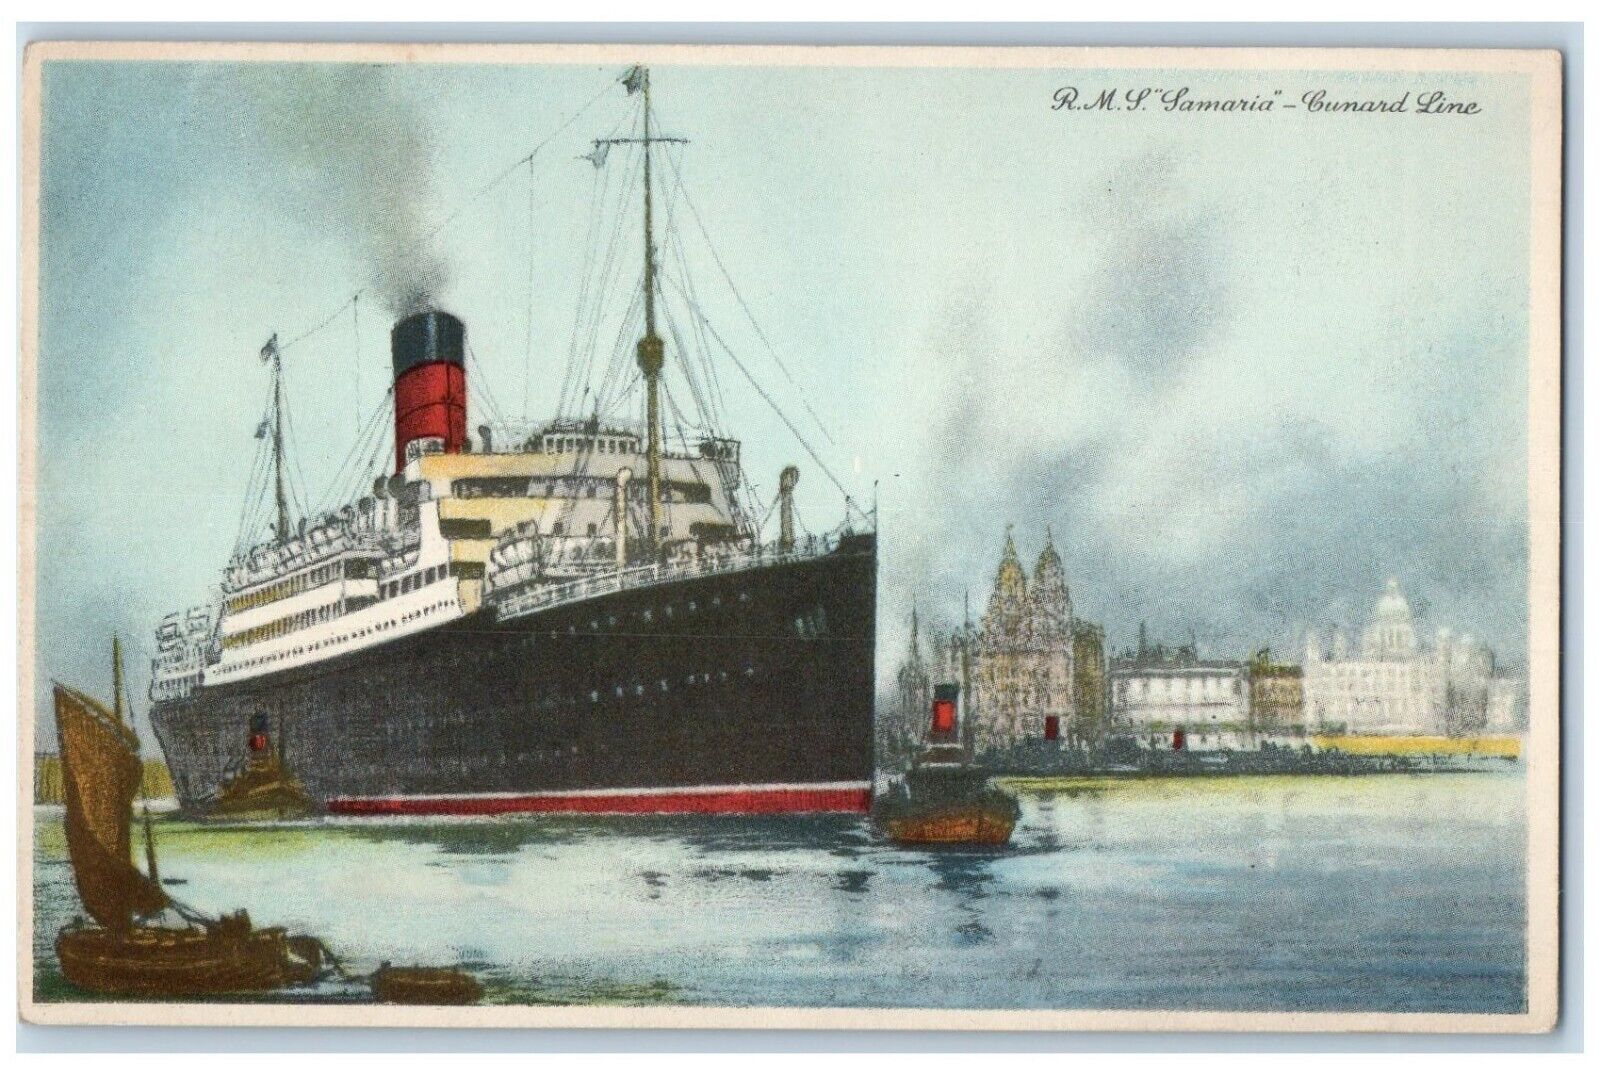 1930 RMS Samaria Cunard Line Steamer Steamship Sailboat Vintage Antique Postcard